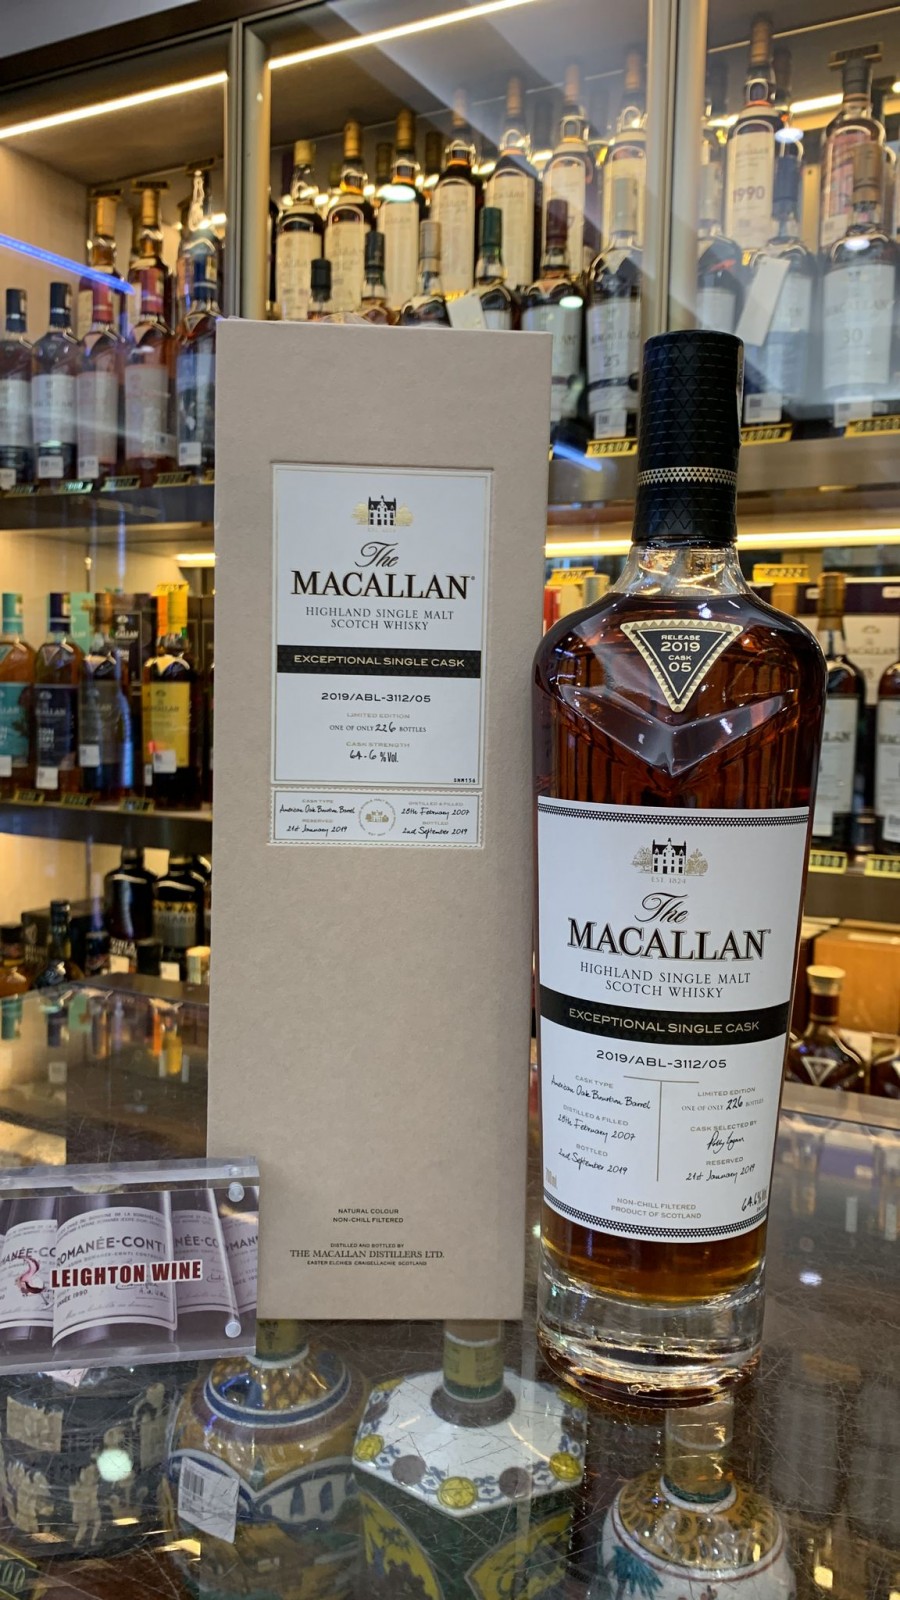 Macallan Exceptional Single Cask 2019/ABL – 3112/05